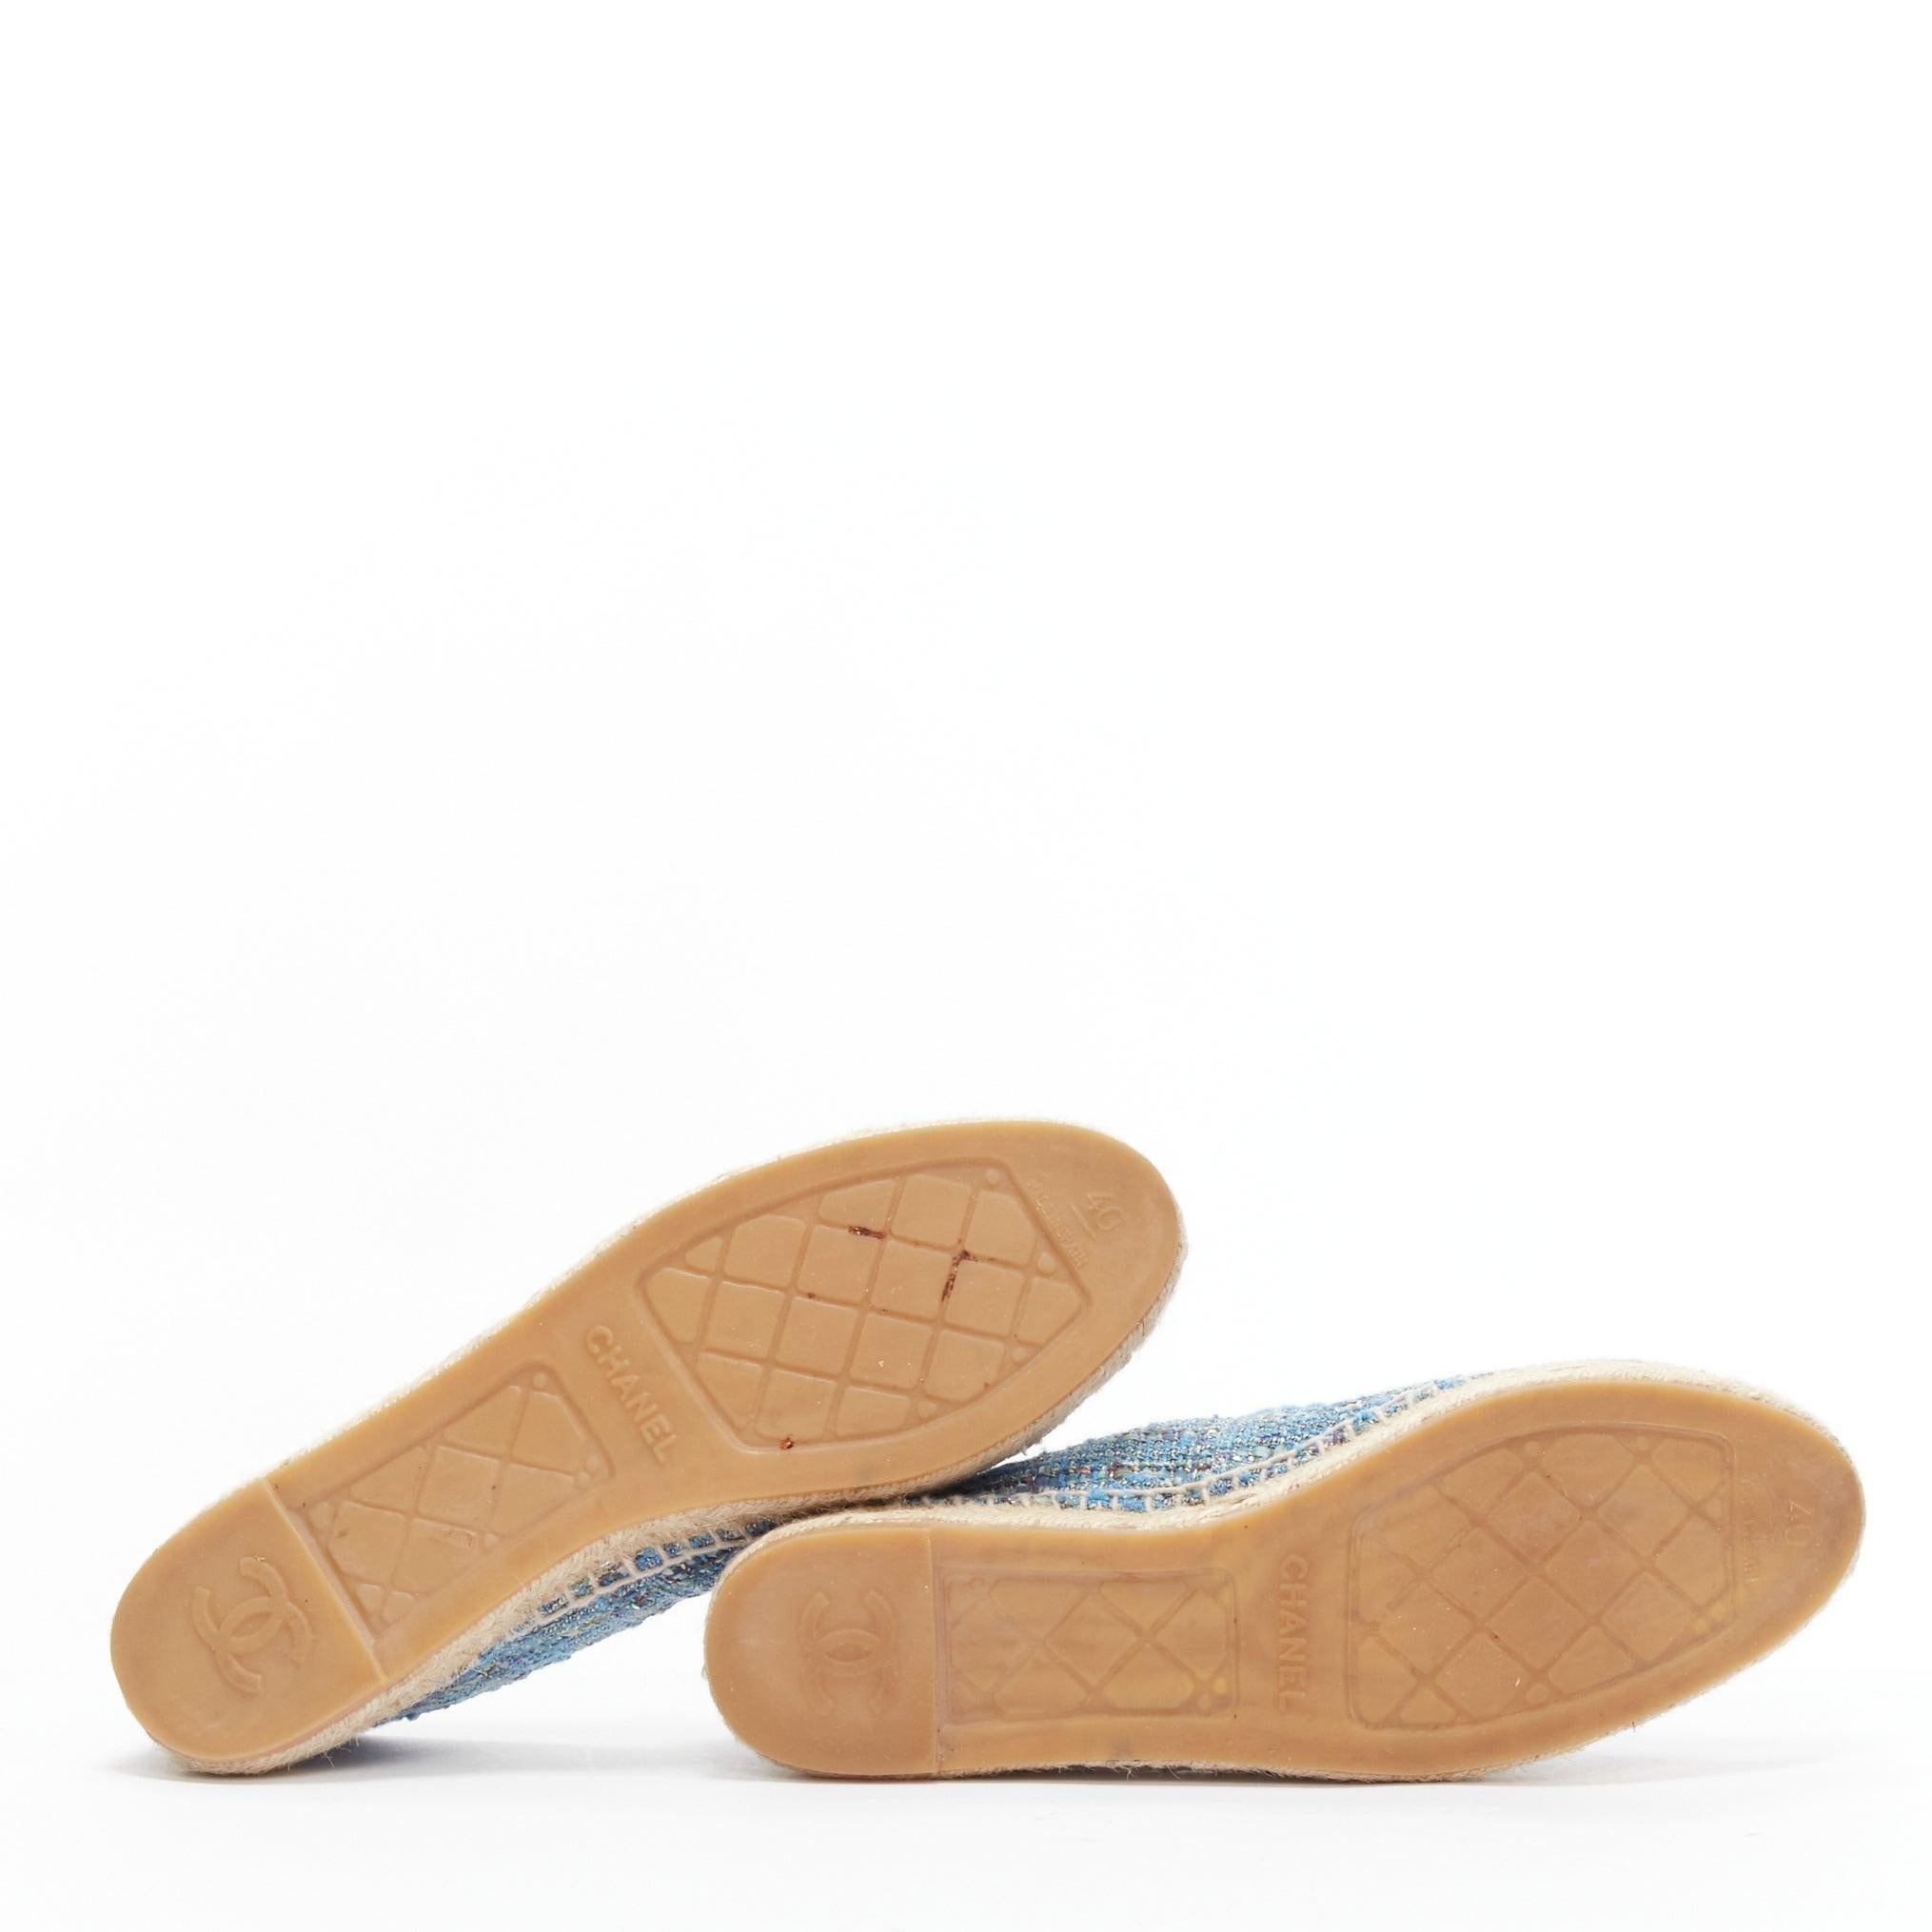 CHANEL blue tweed CC logo leather toe cap espadrille shoes EU40 5